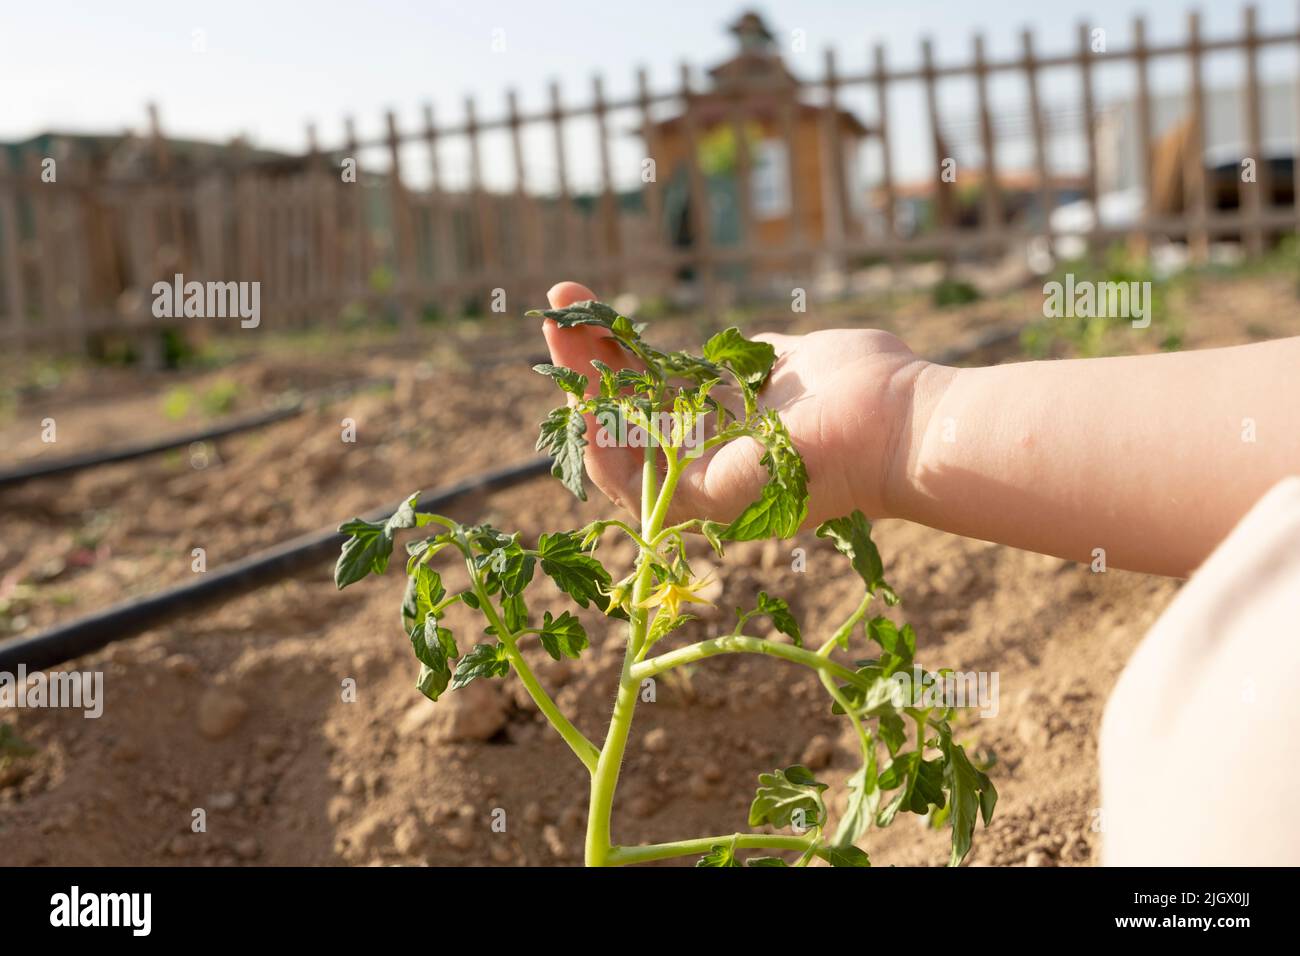 Holding tomato seedling, preschool child holding tomato seedling. Gardening activity concept idea photo. Selective focus on hand and plant. Stock Photo